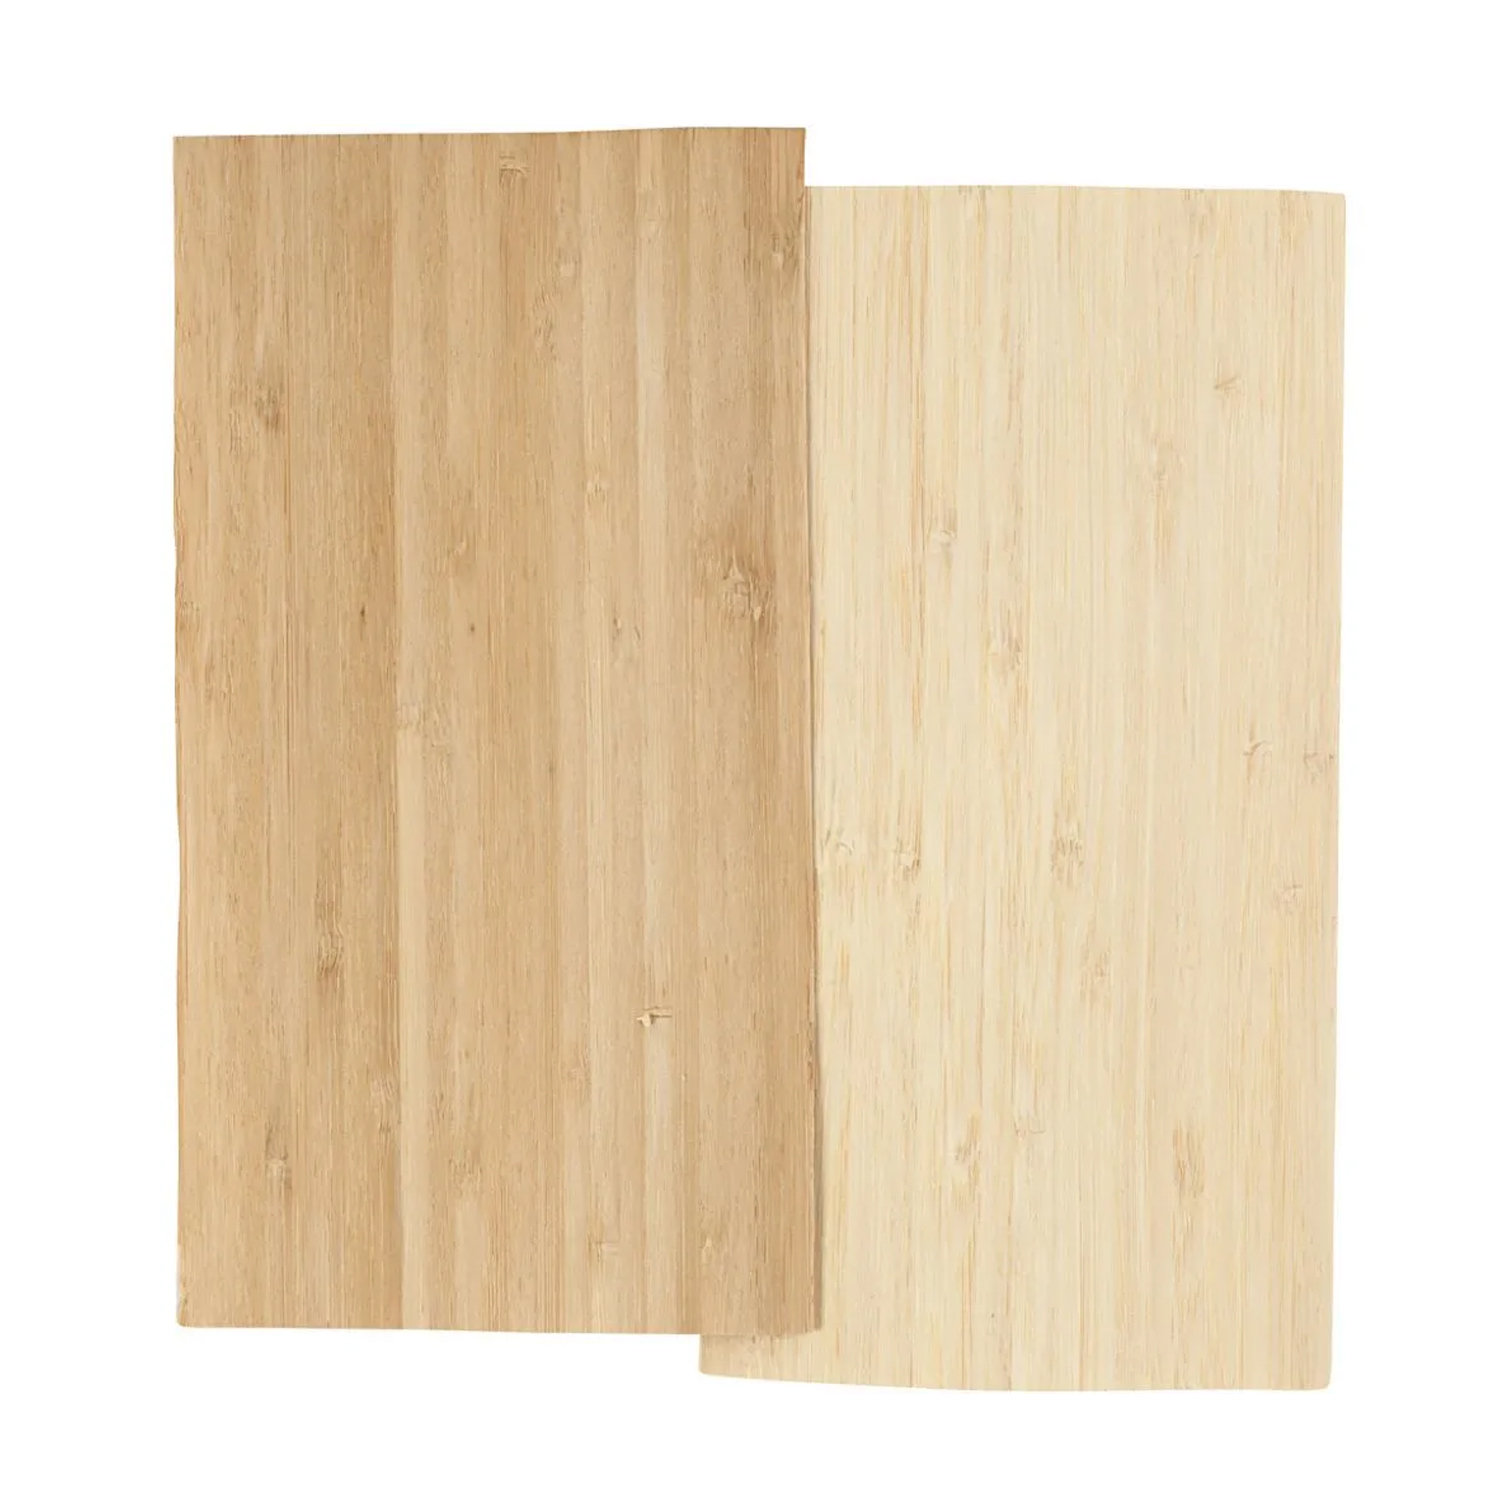 NEU Bambus-Furnierplatten, 12 x 22 cm, 2 Blatt